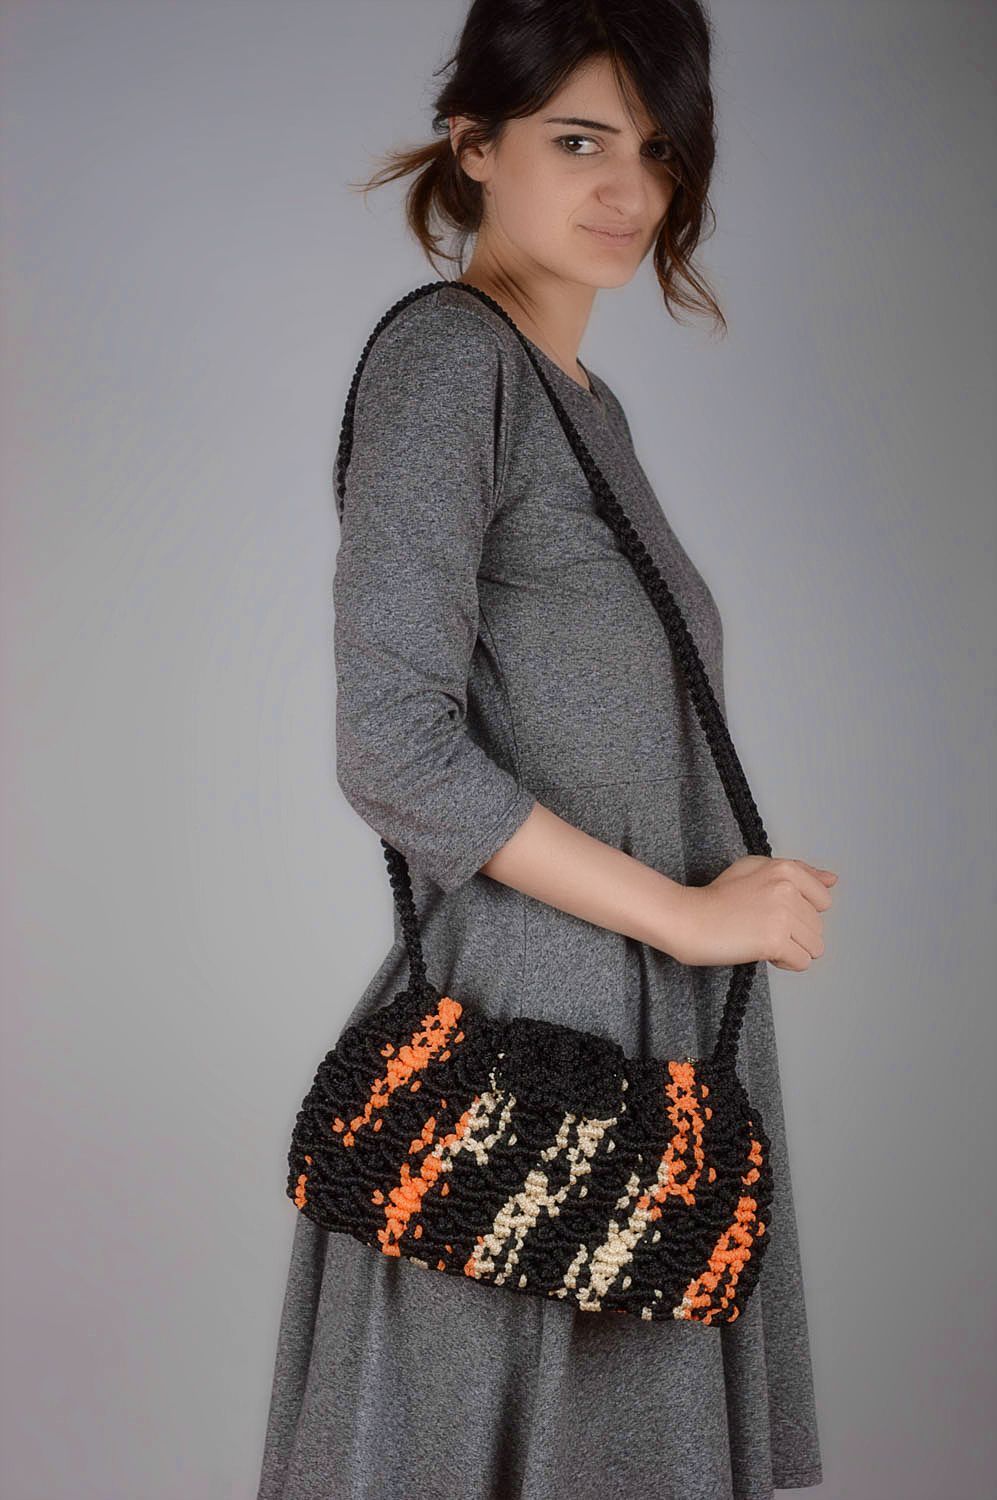 Macrame bag handmade accessories ladies handbags women purse gifts for girls photo 5